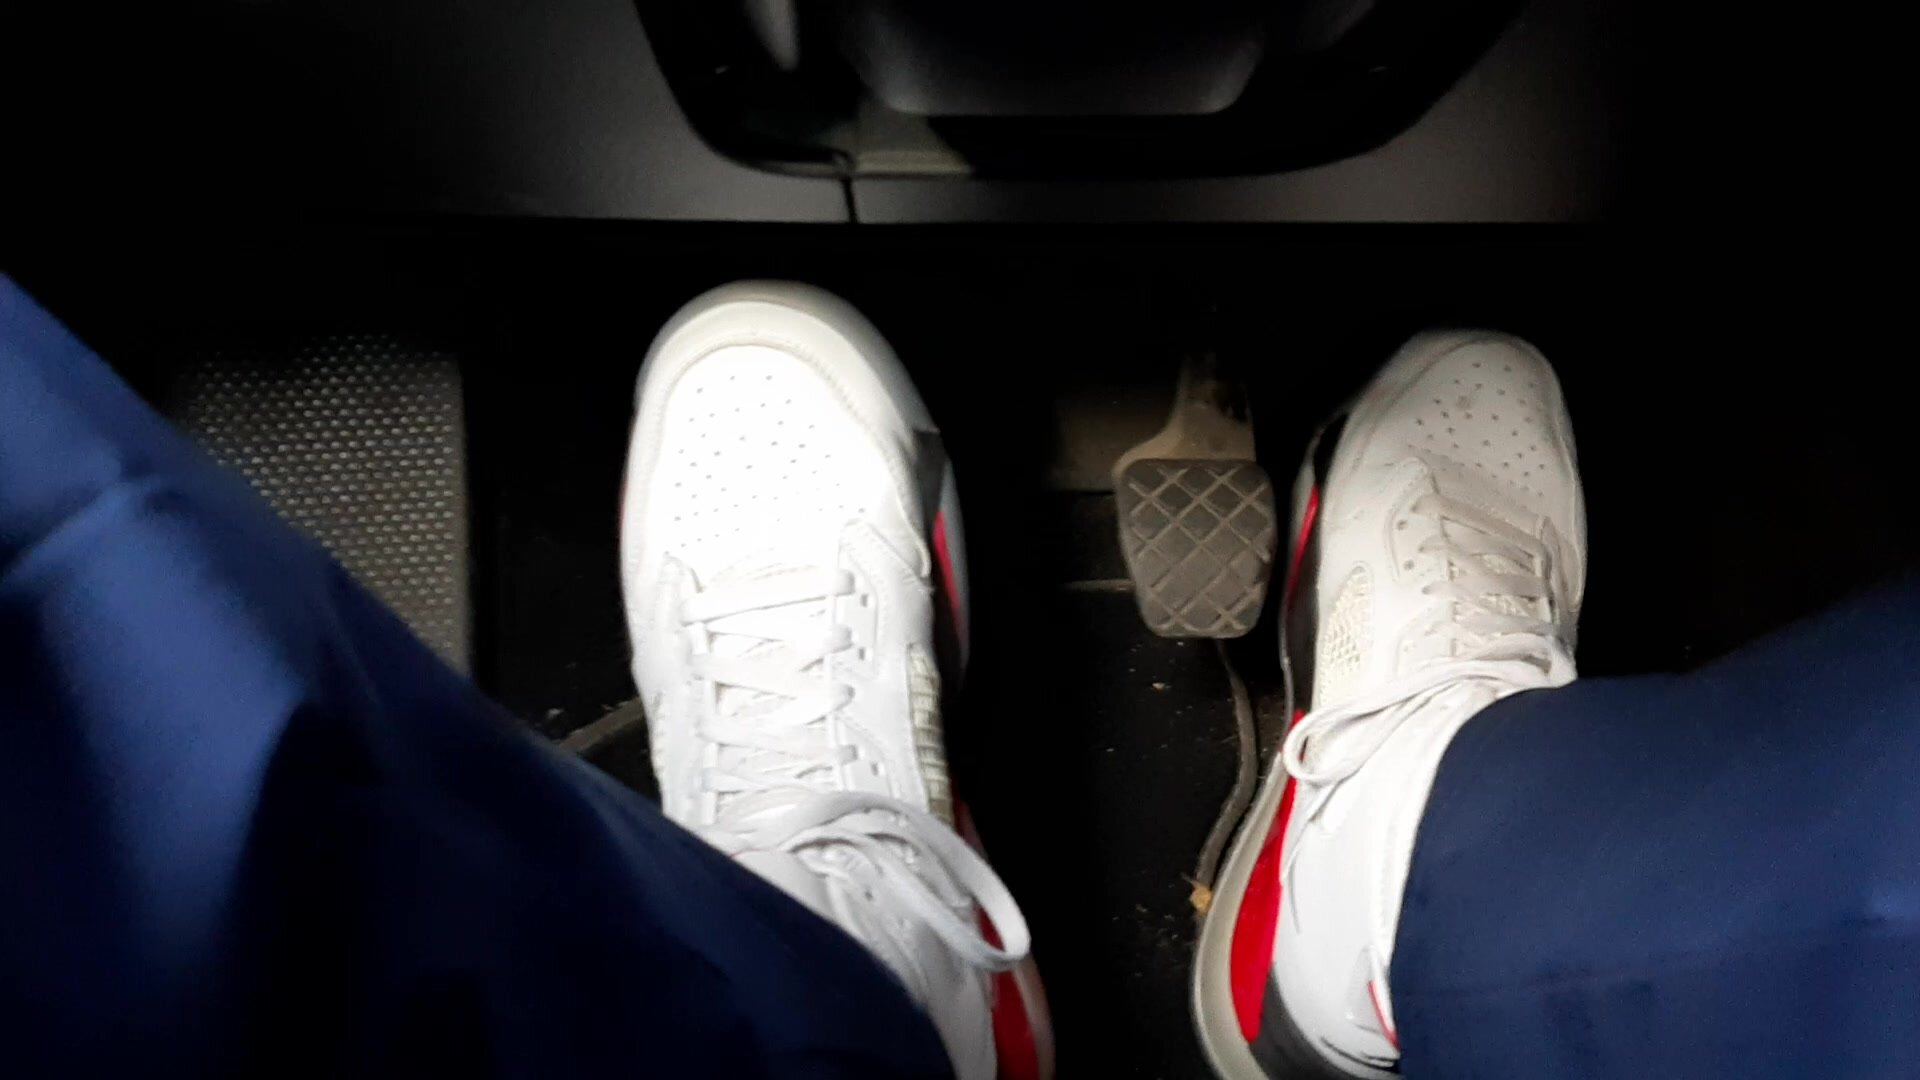 Driving in my Jordans